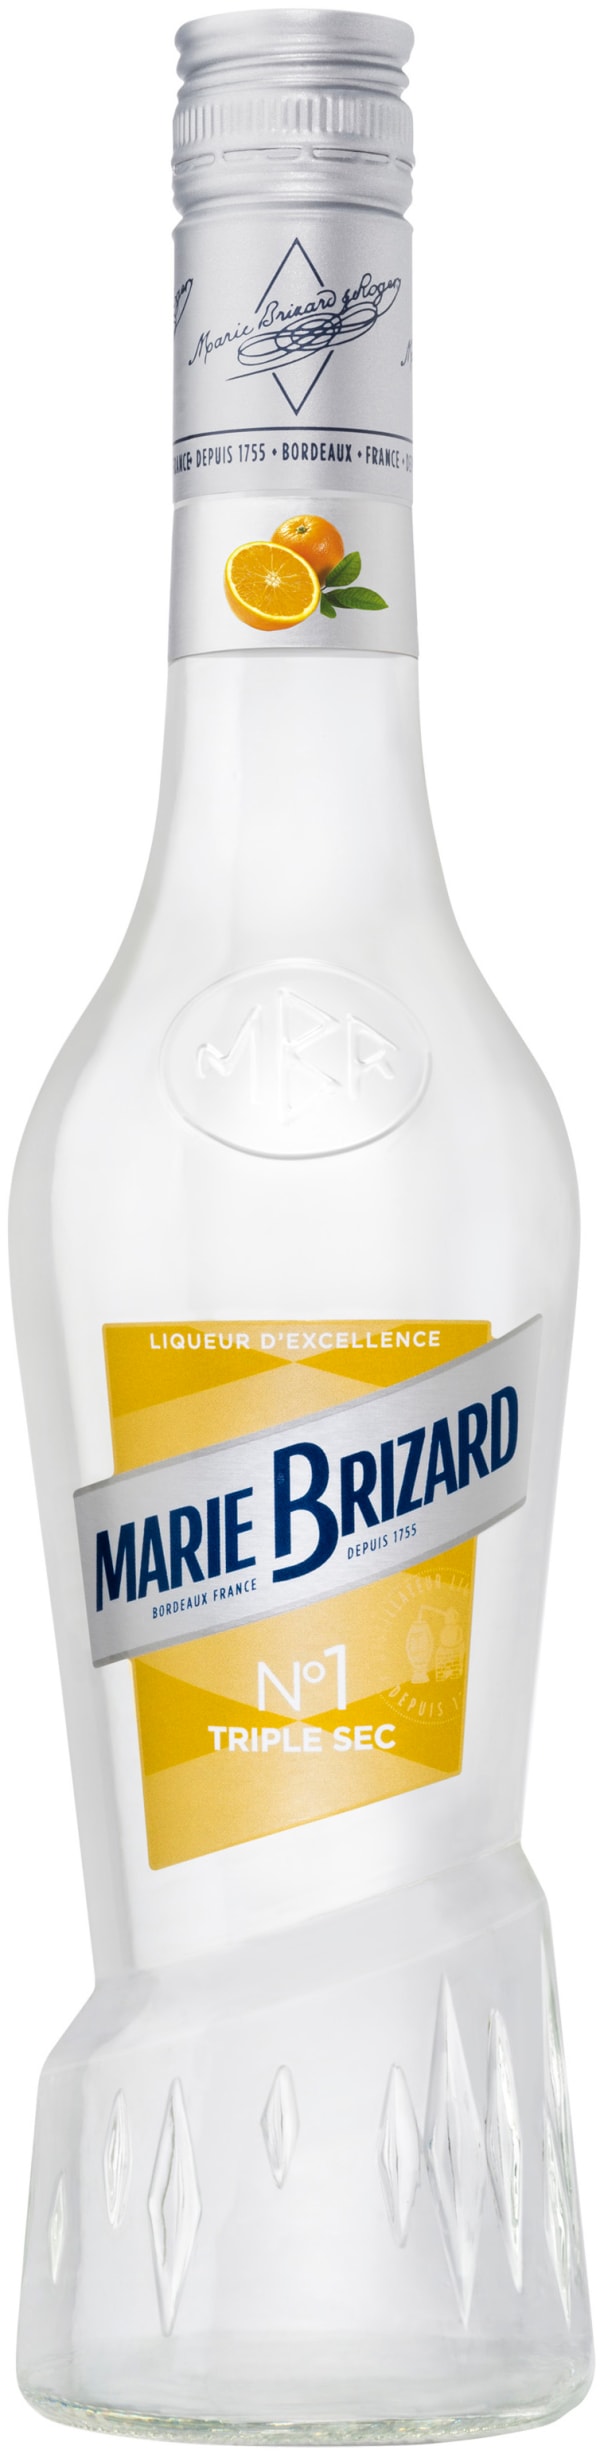 Buy Marie Brizard Triple Sec online